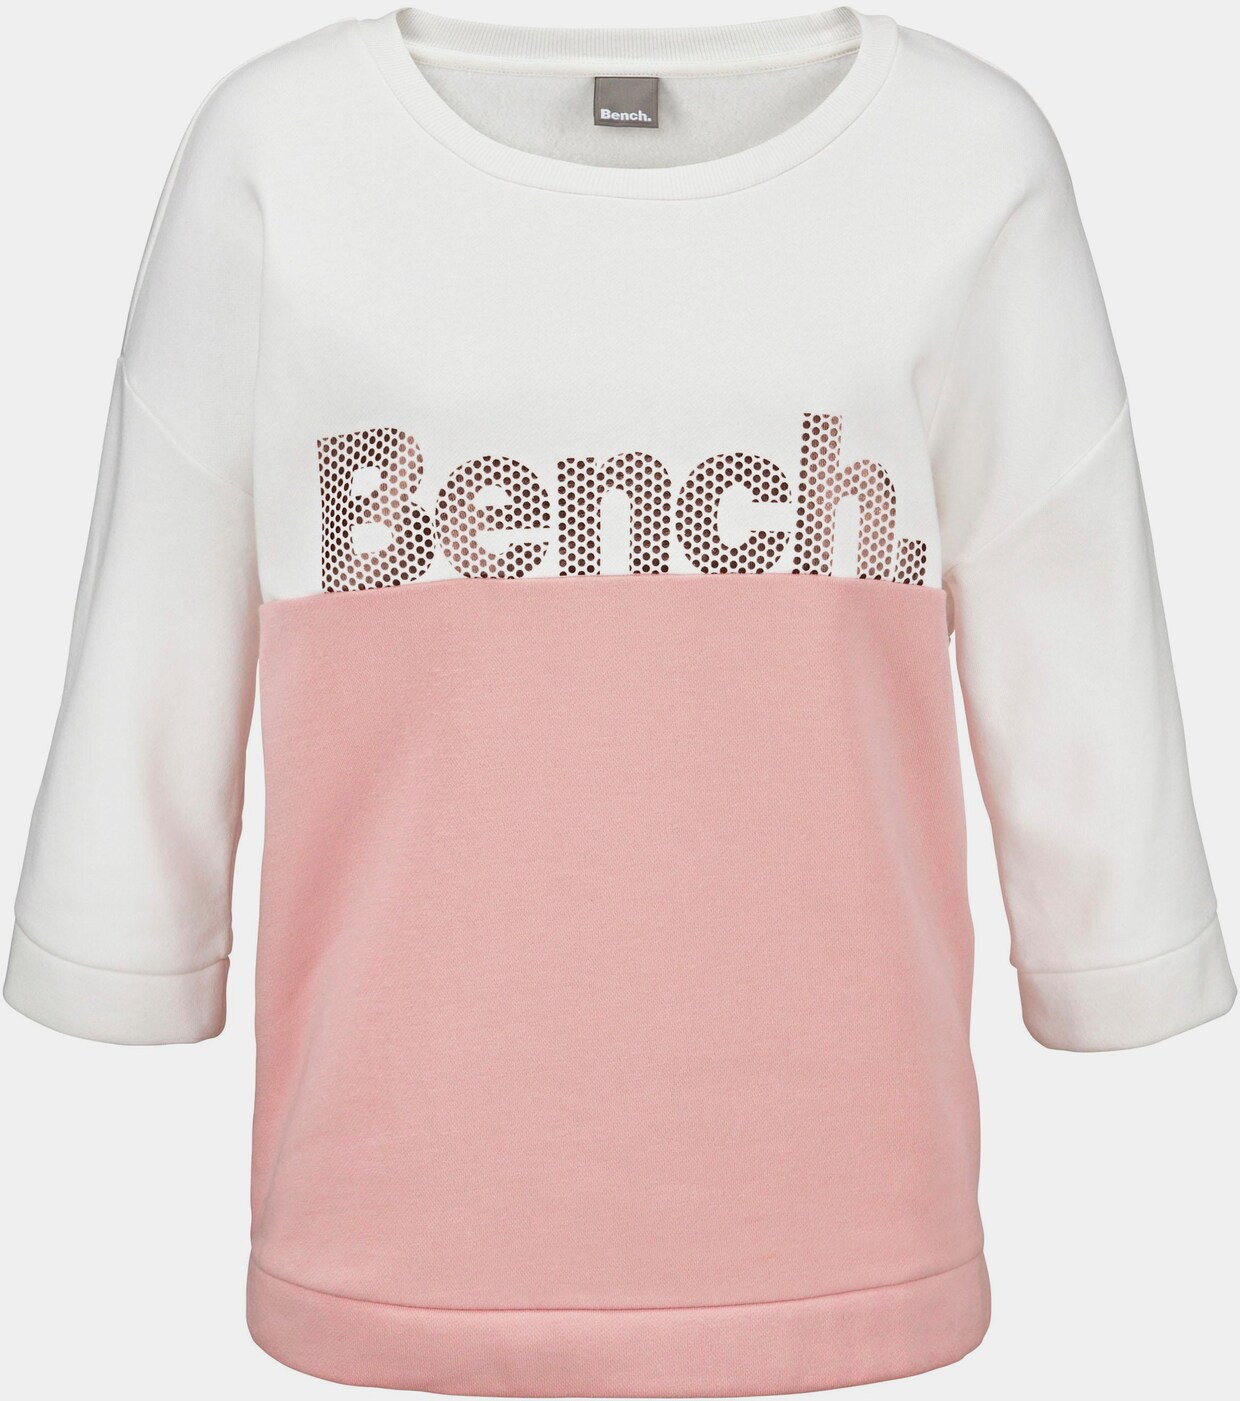 Bench. Sweatshirt - apricot-ecru